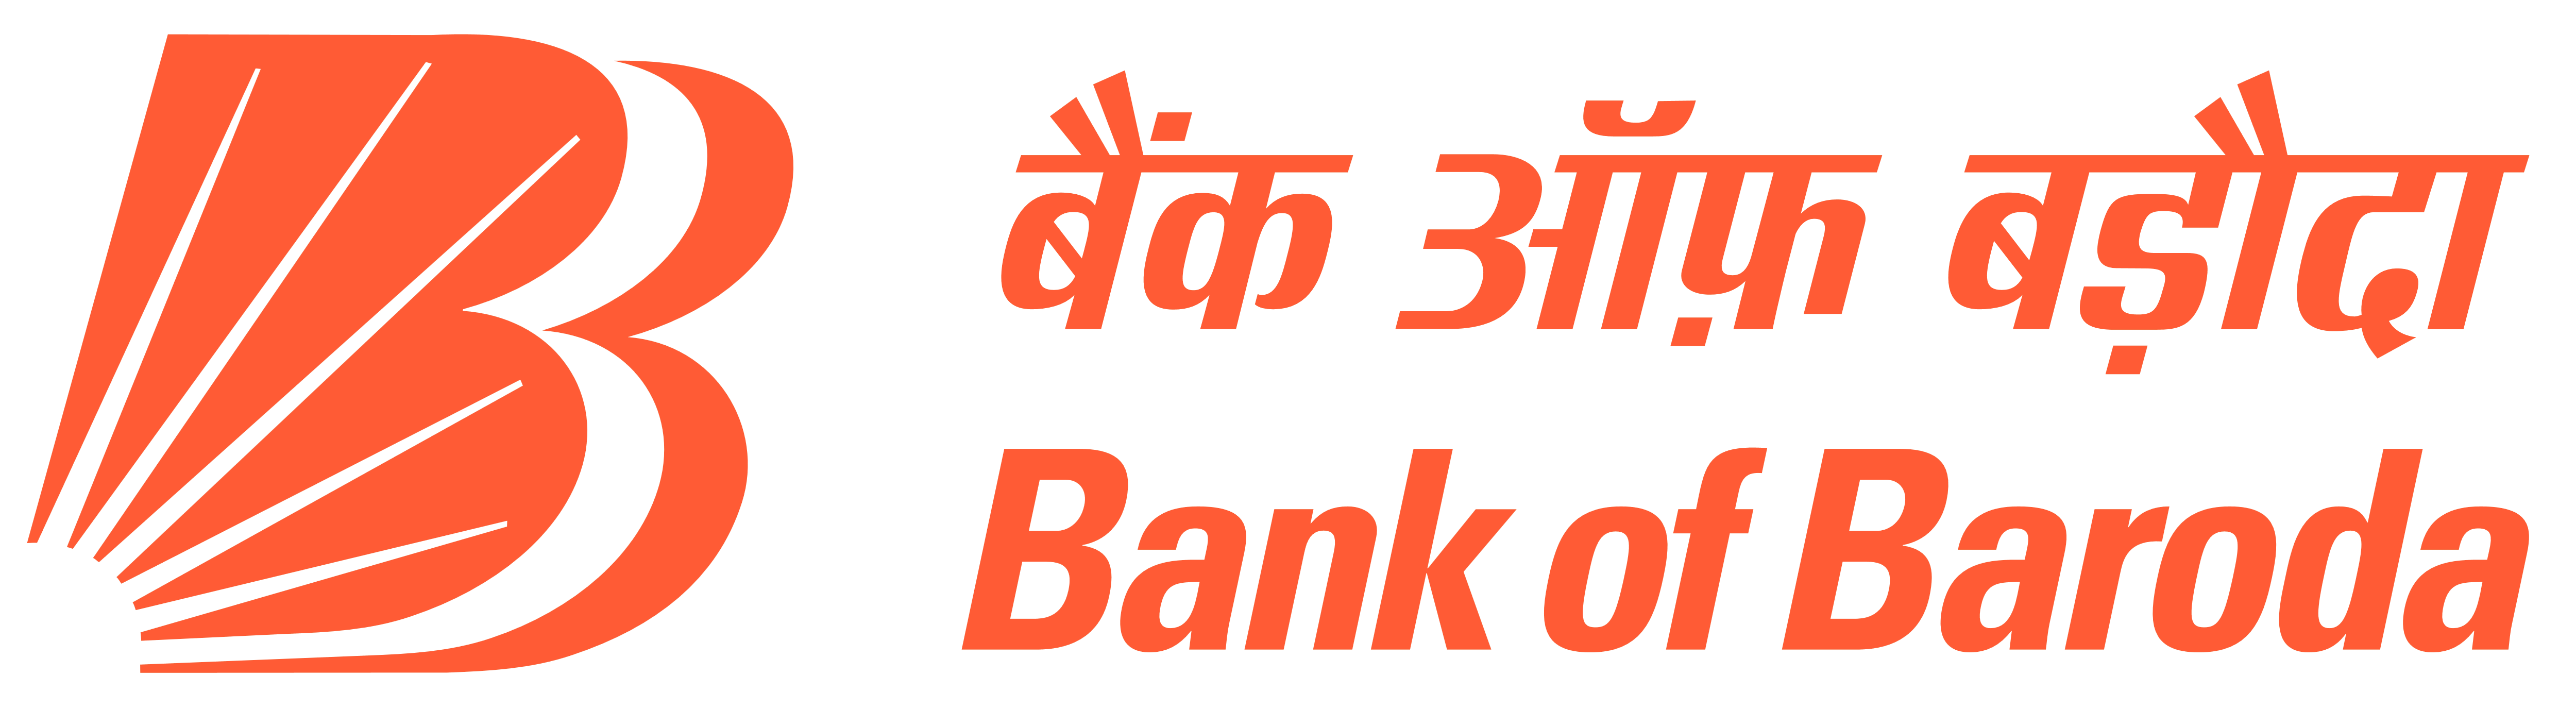 Bank of Baroda â€“ Logos Download